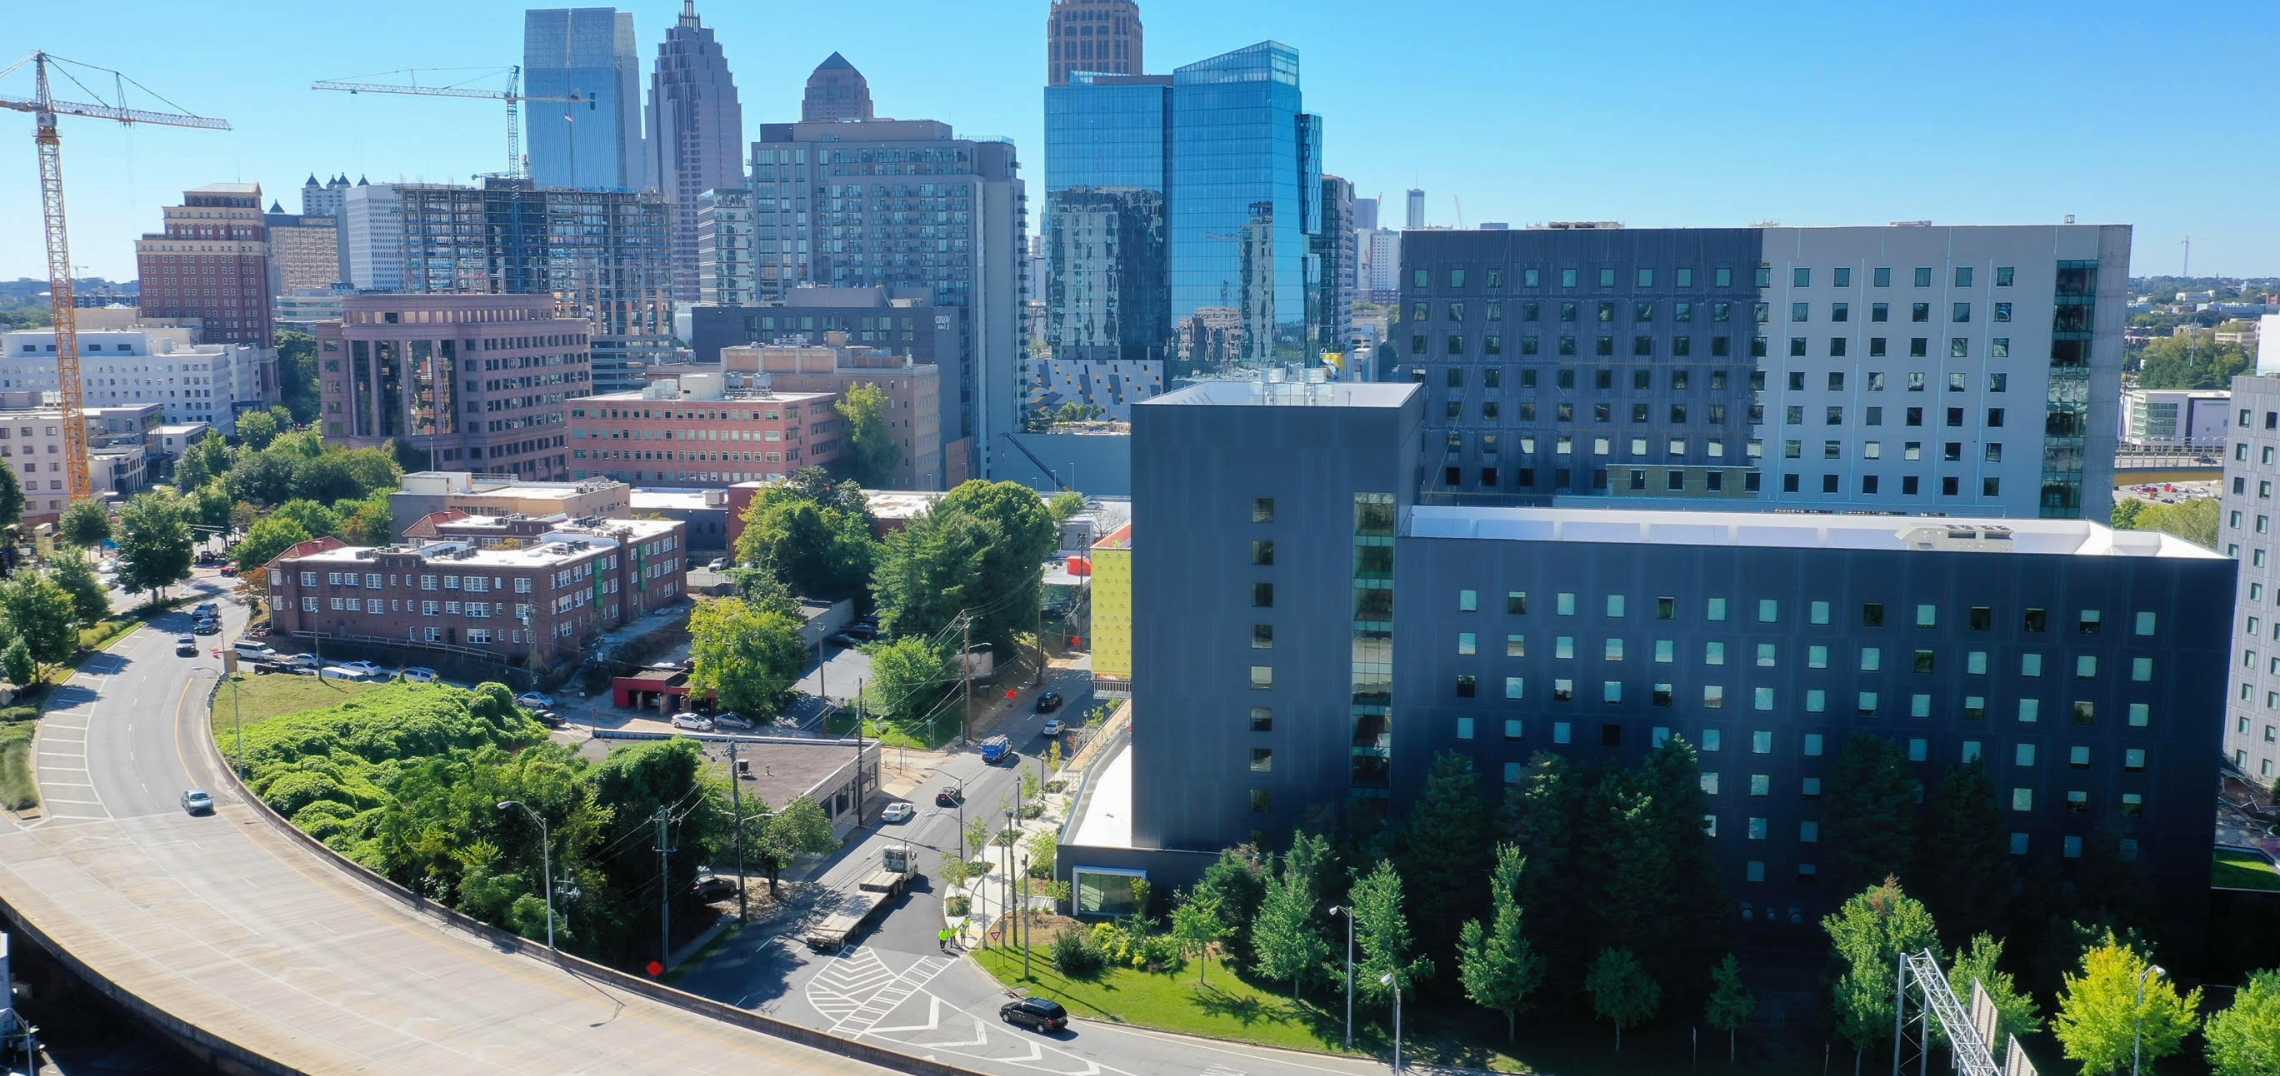 SCAD Atlanta's swelling campus has transformed Midtown blocks